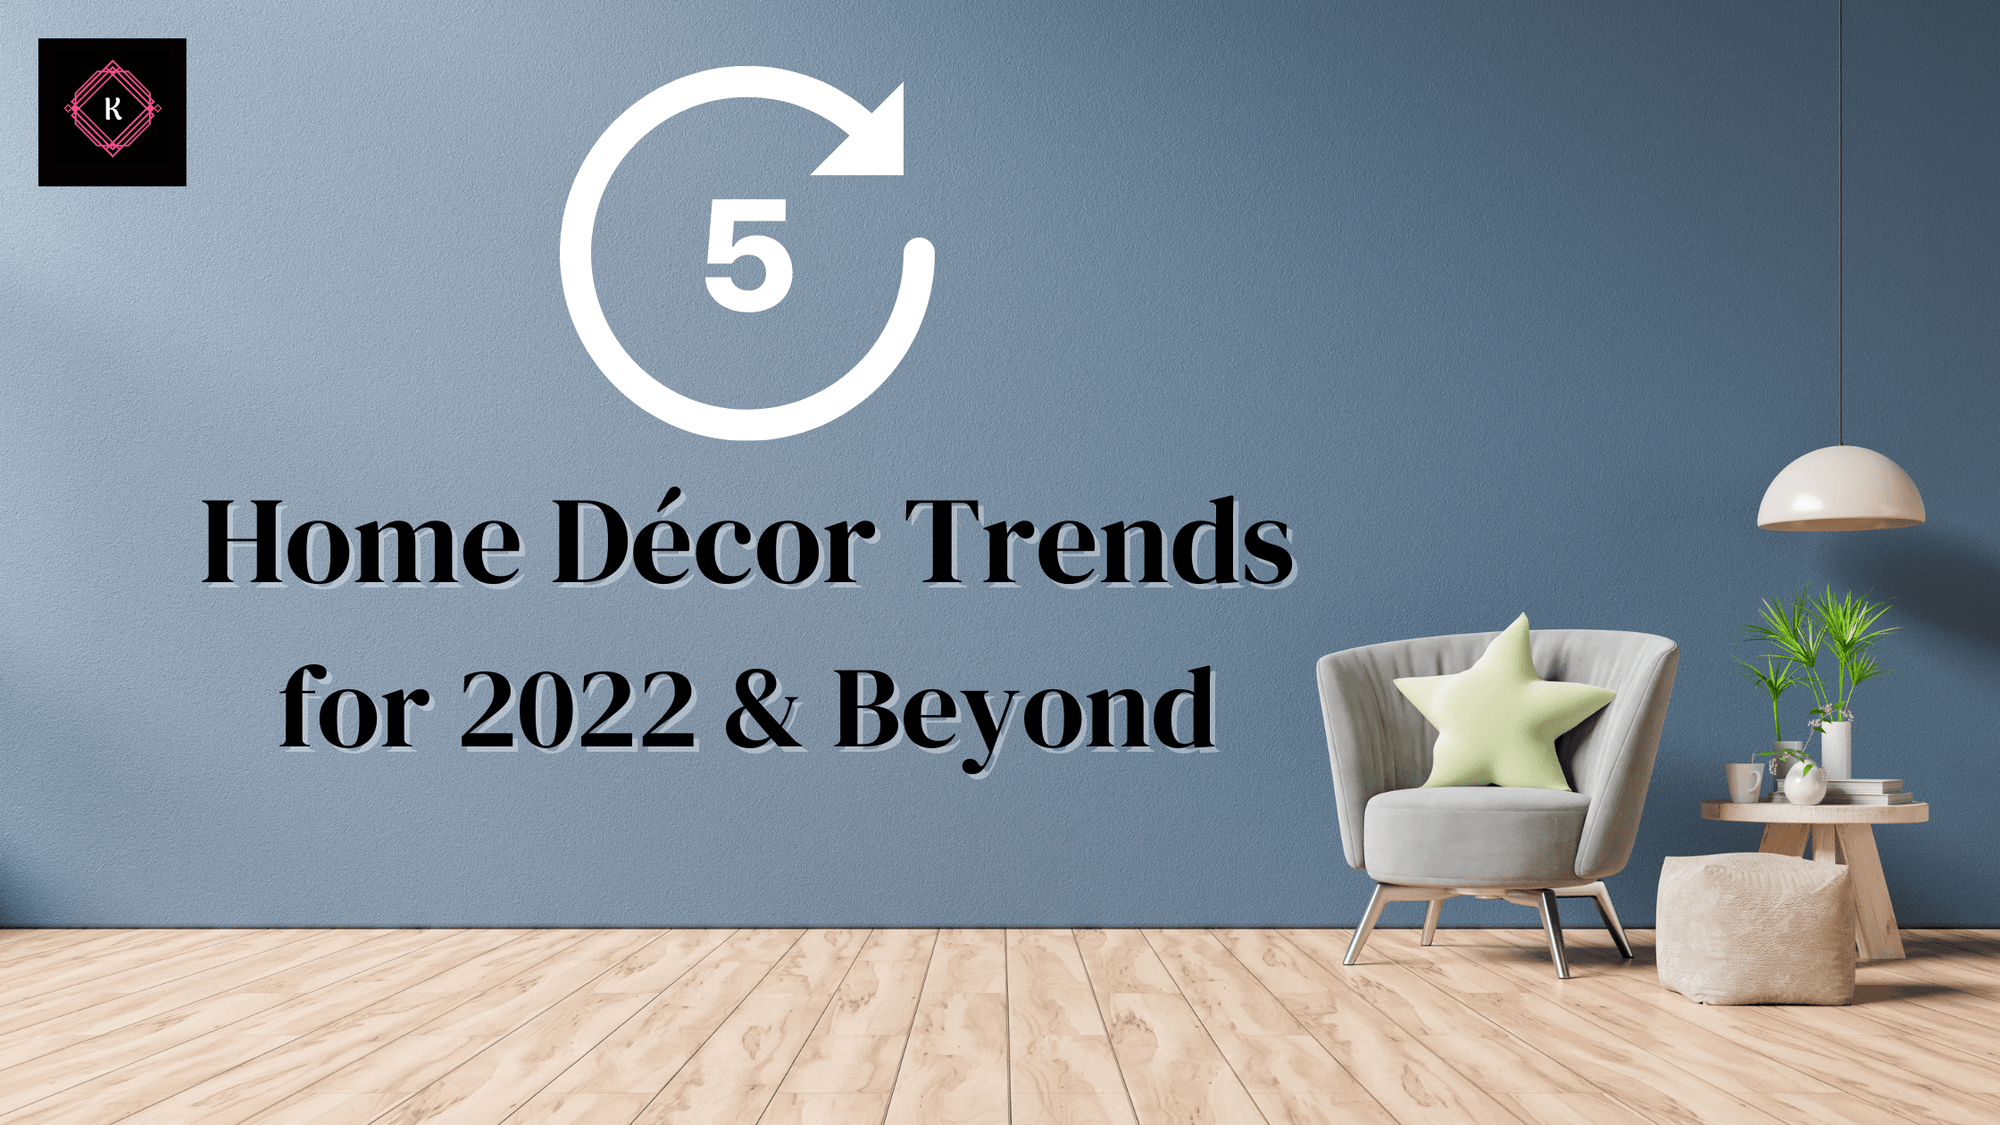 5 Home Décor Trends for 2022 & Beyond - Kustom Kreationz by Kila